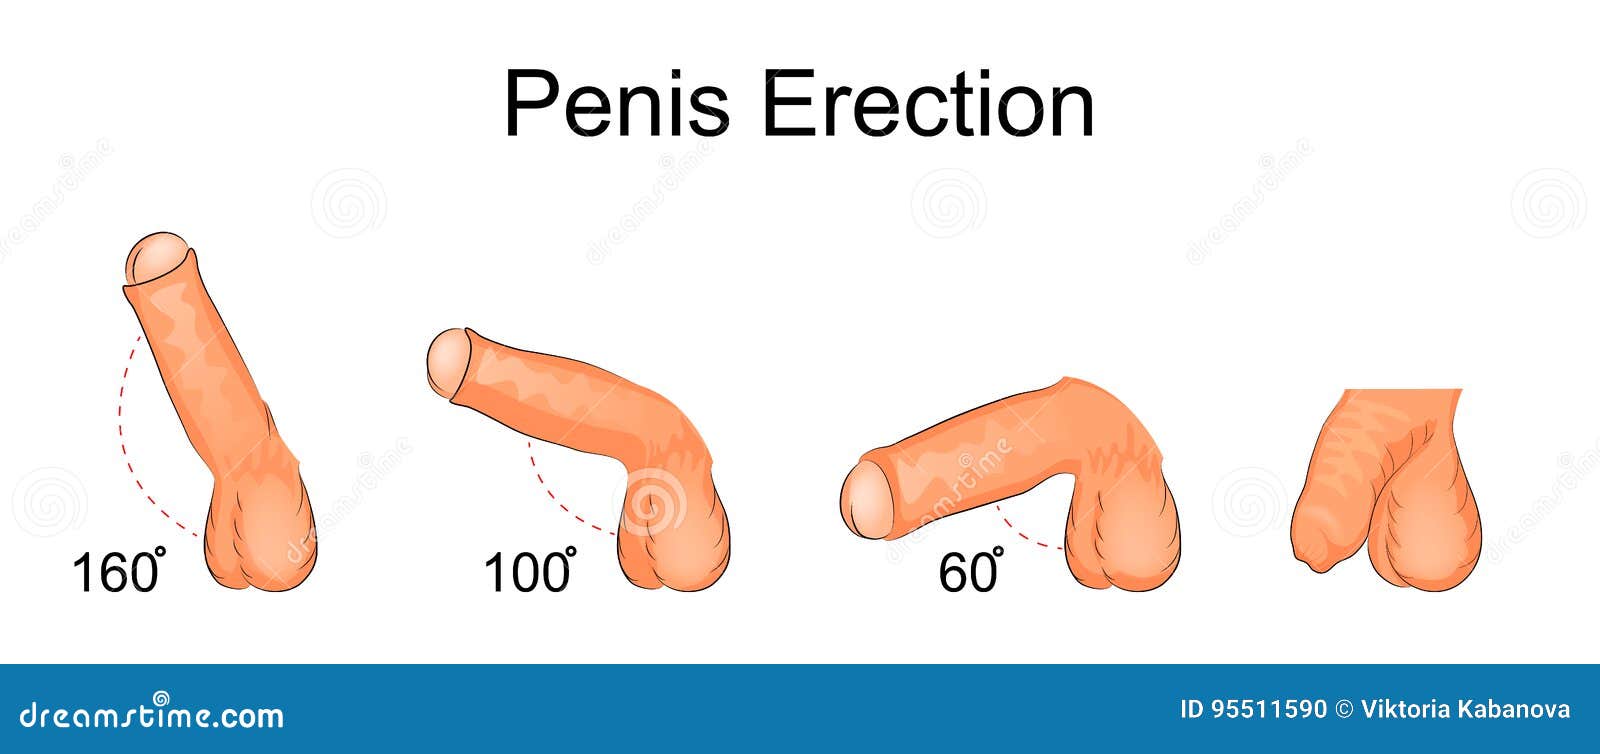 penis z erekcją, ale nie warte